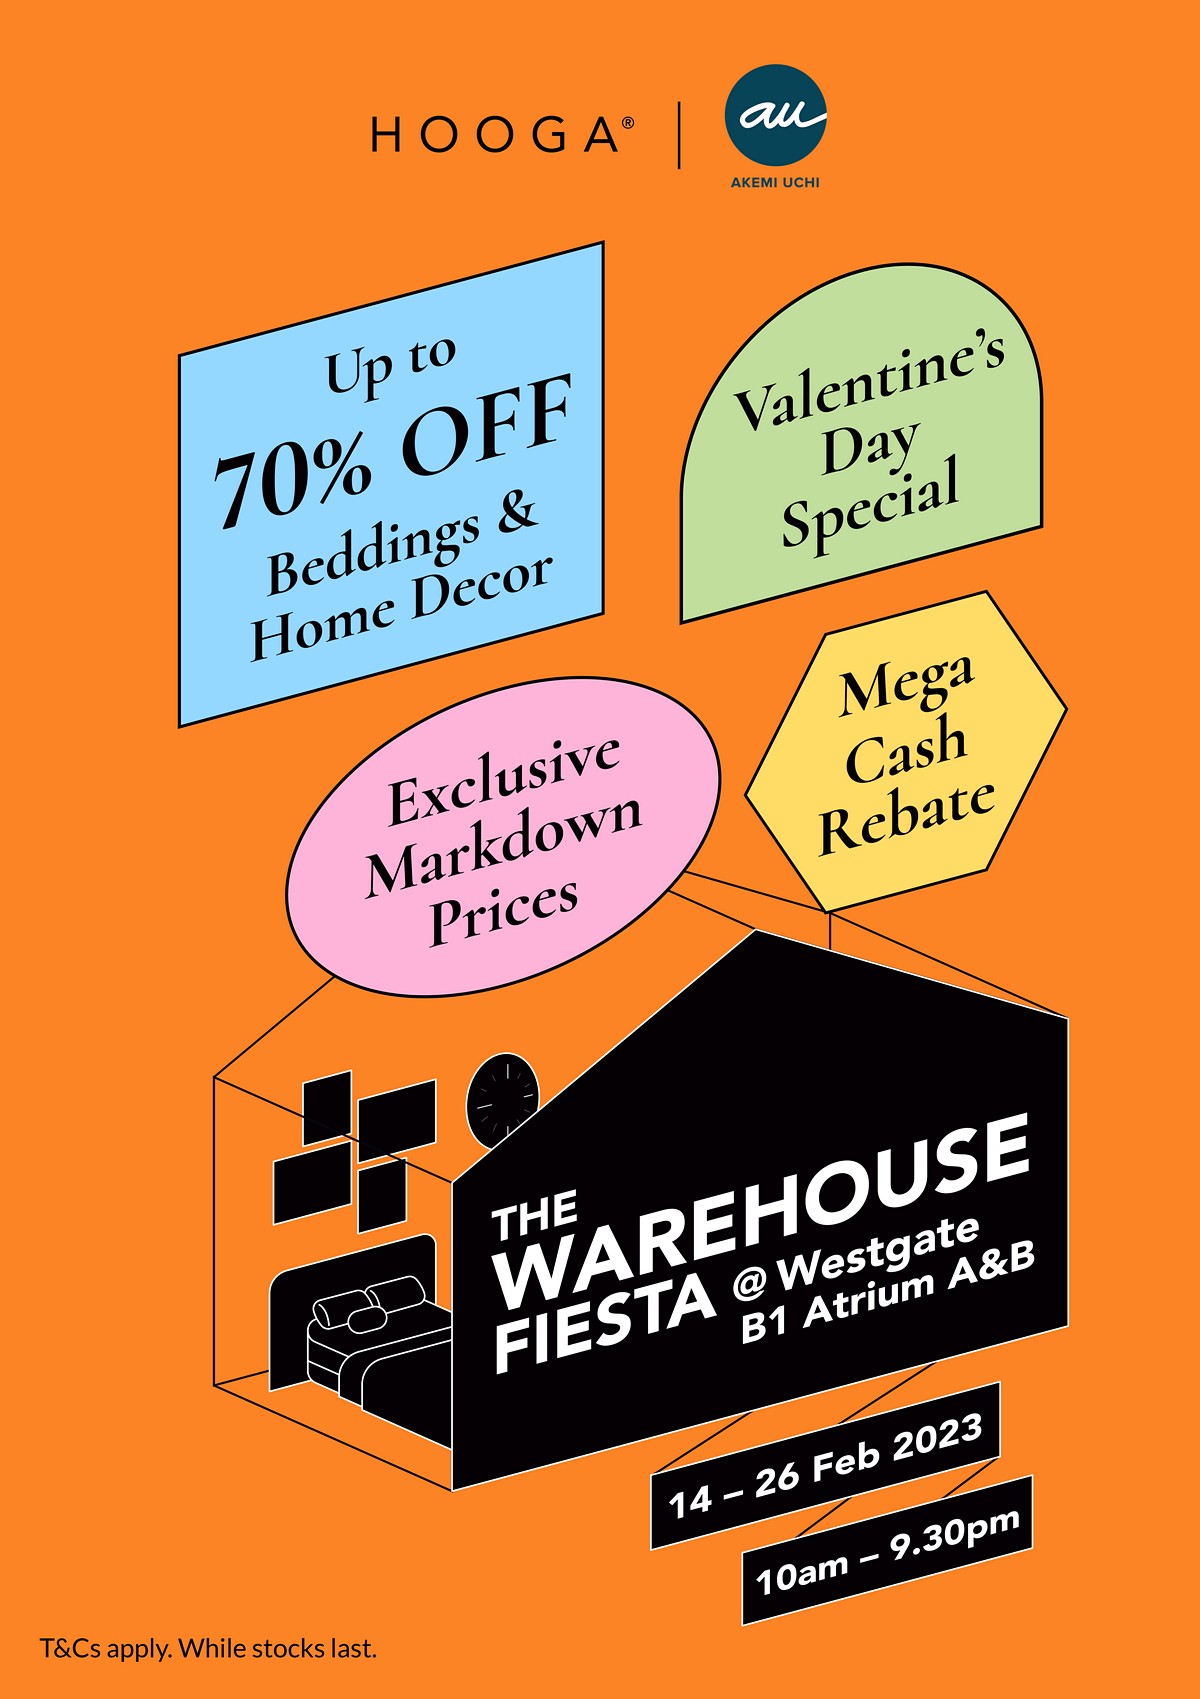 AU_WarehouseSales_Westgate_RGB 14-26 Feb 2023: HOOGA & AKEMI UCHI Warehouse Sale: The WAREHOUSE Fiesta! Up to 70% OFF at Westgate